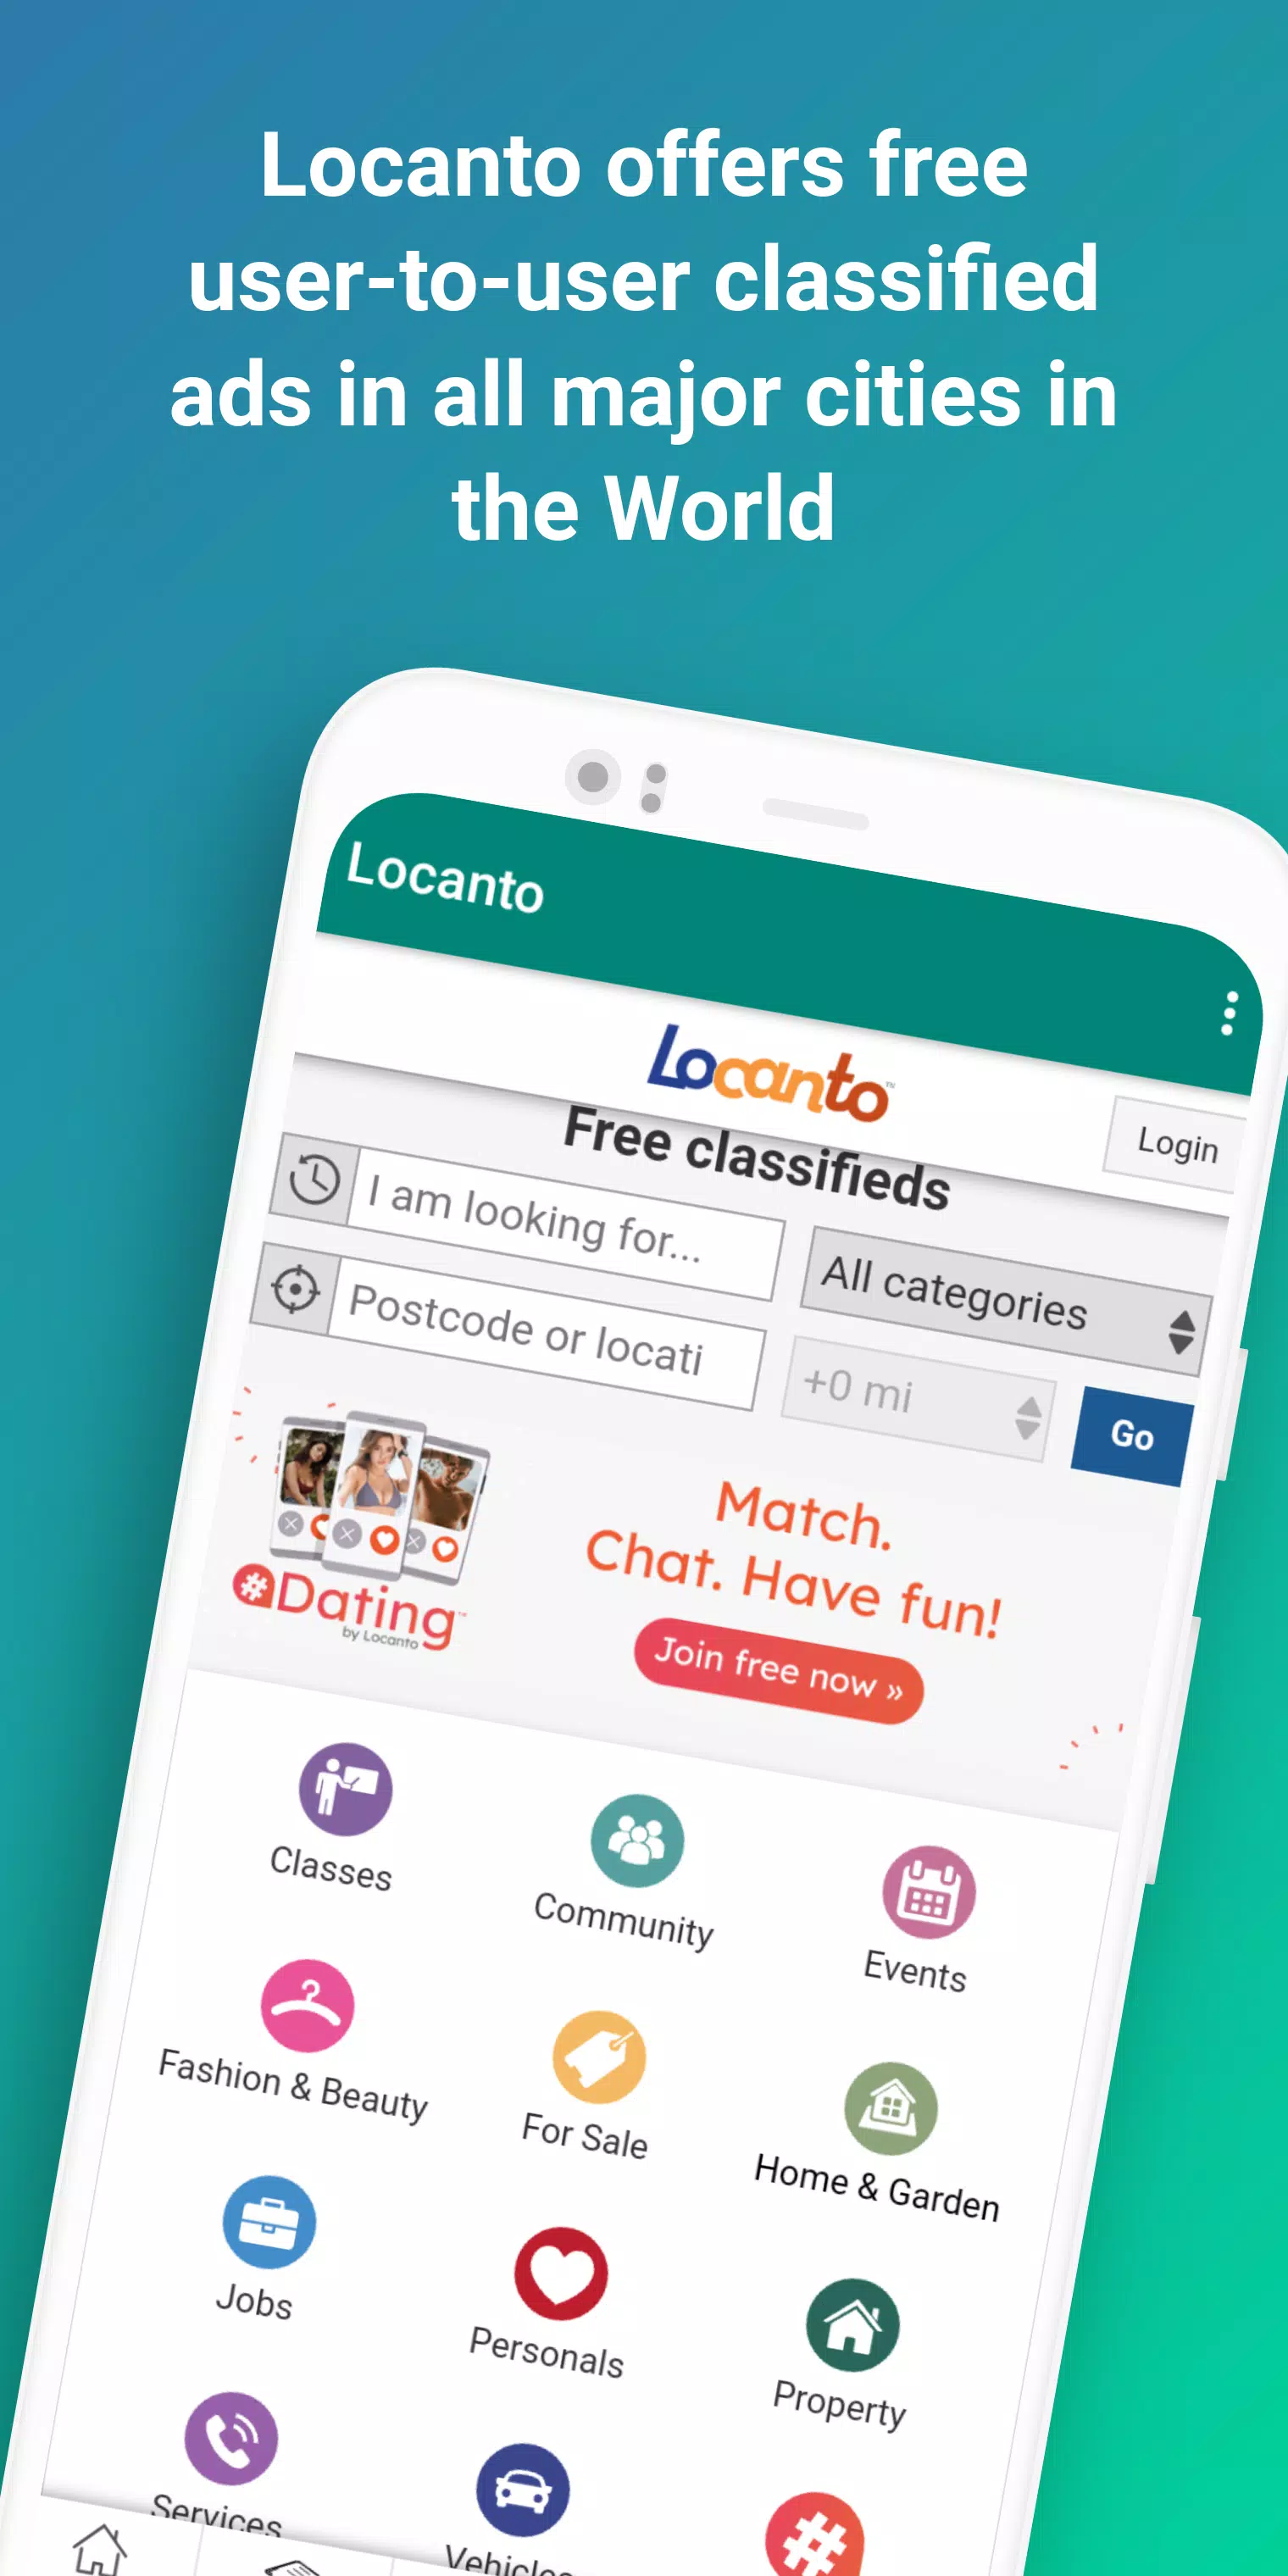 The Locanto app